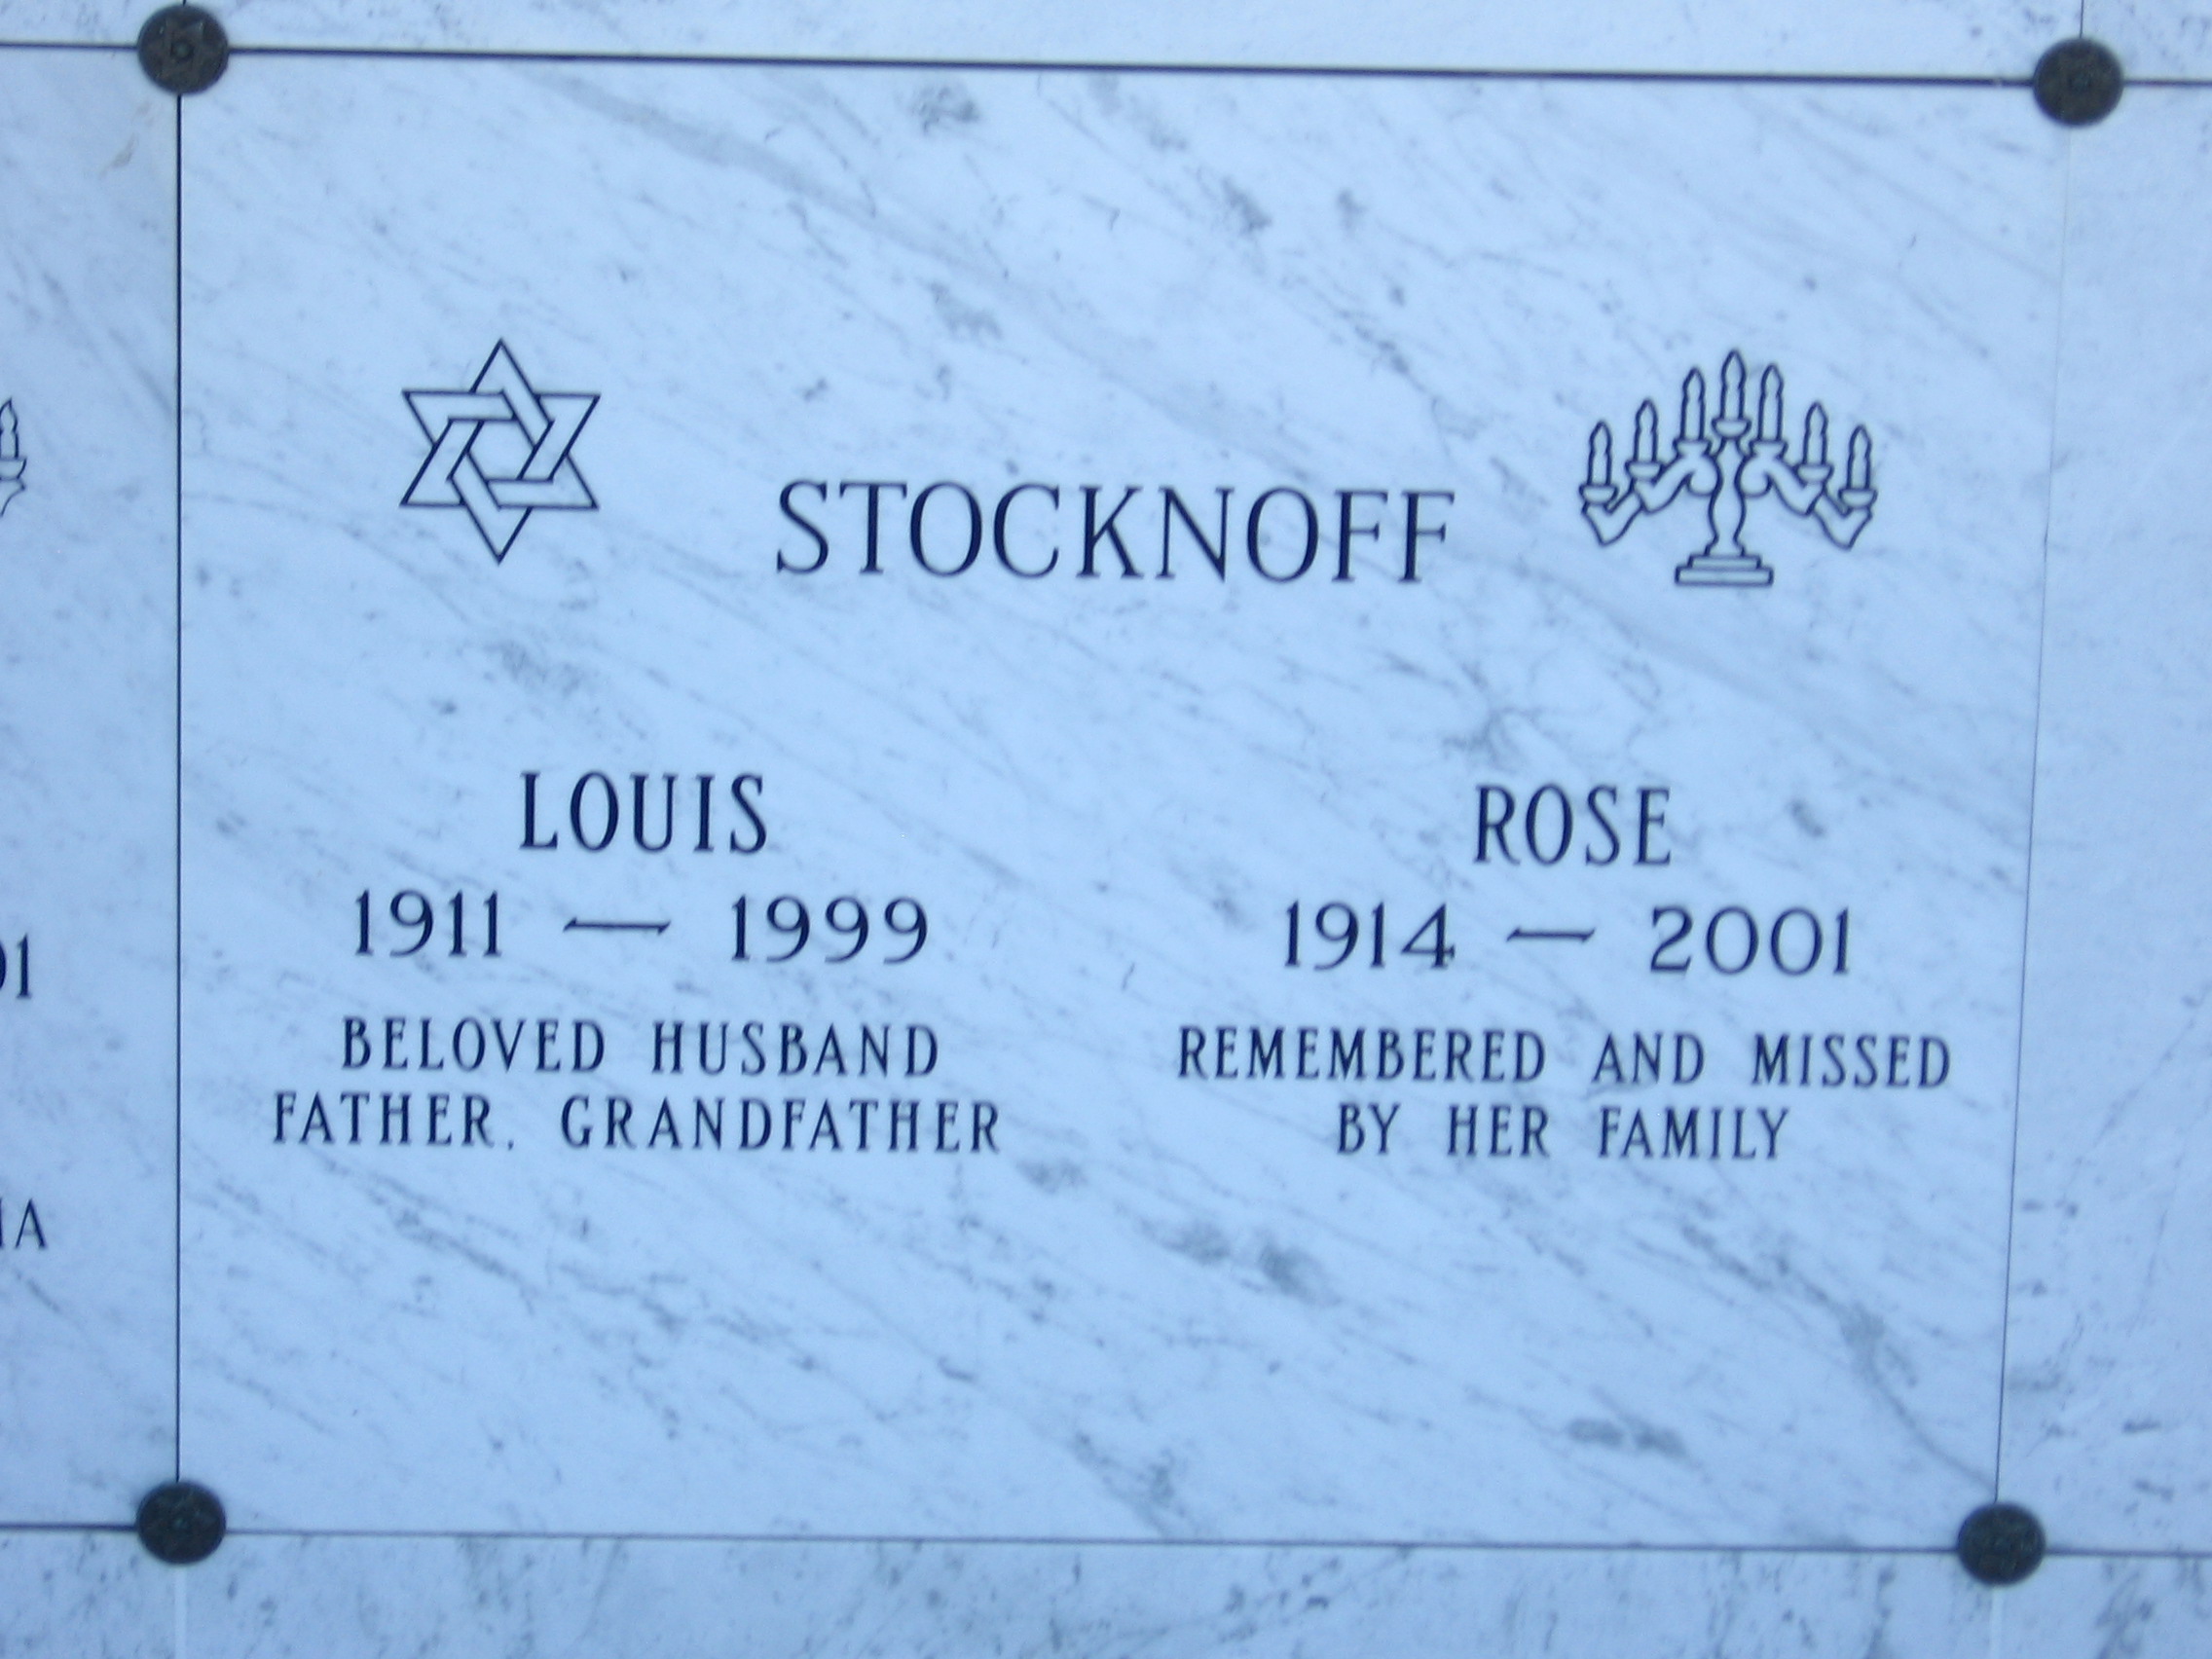 Rose Stocknoff